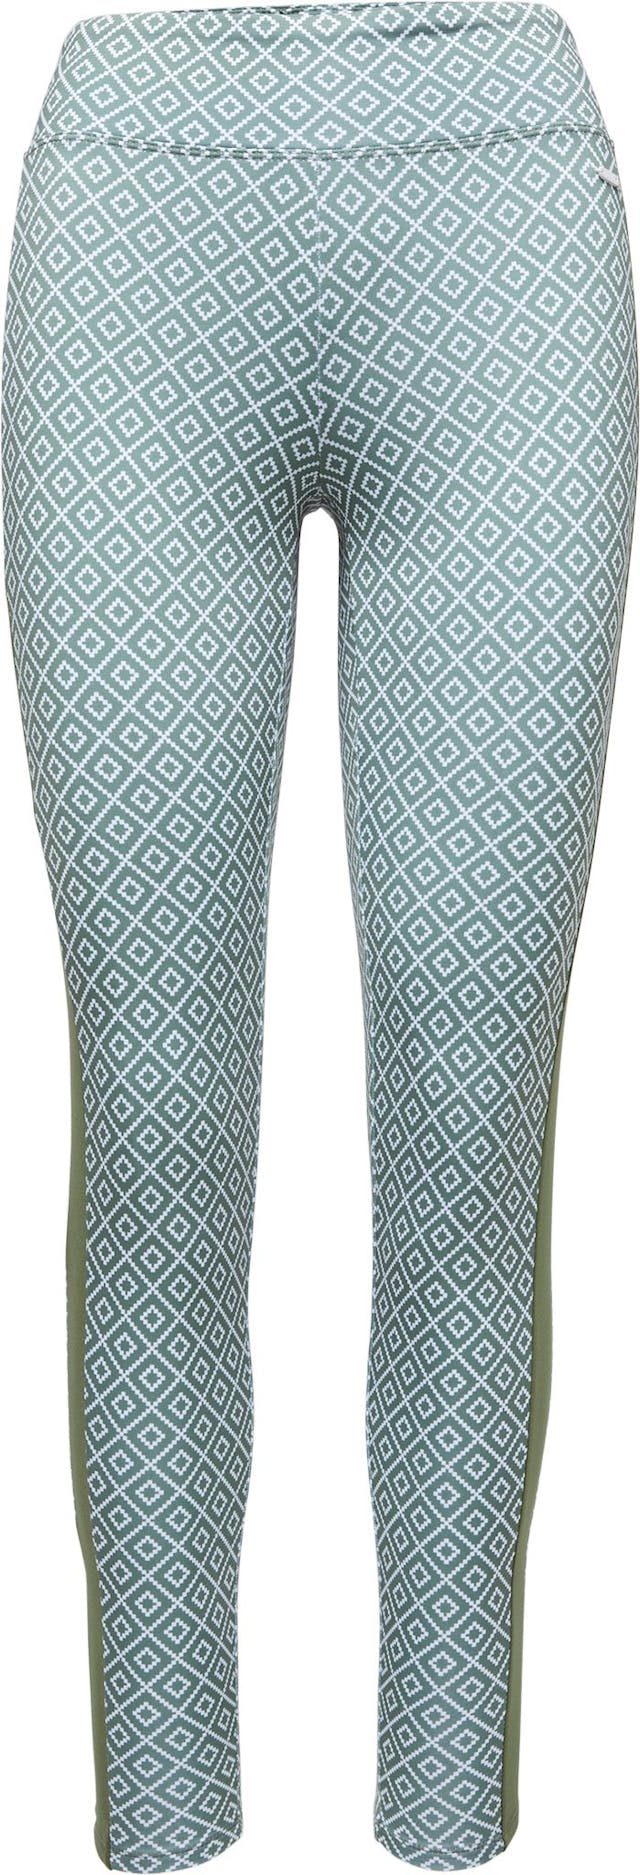 Product image for Meribel Elastic Waistband Printed Leggings - Women's